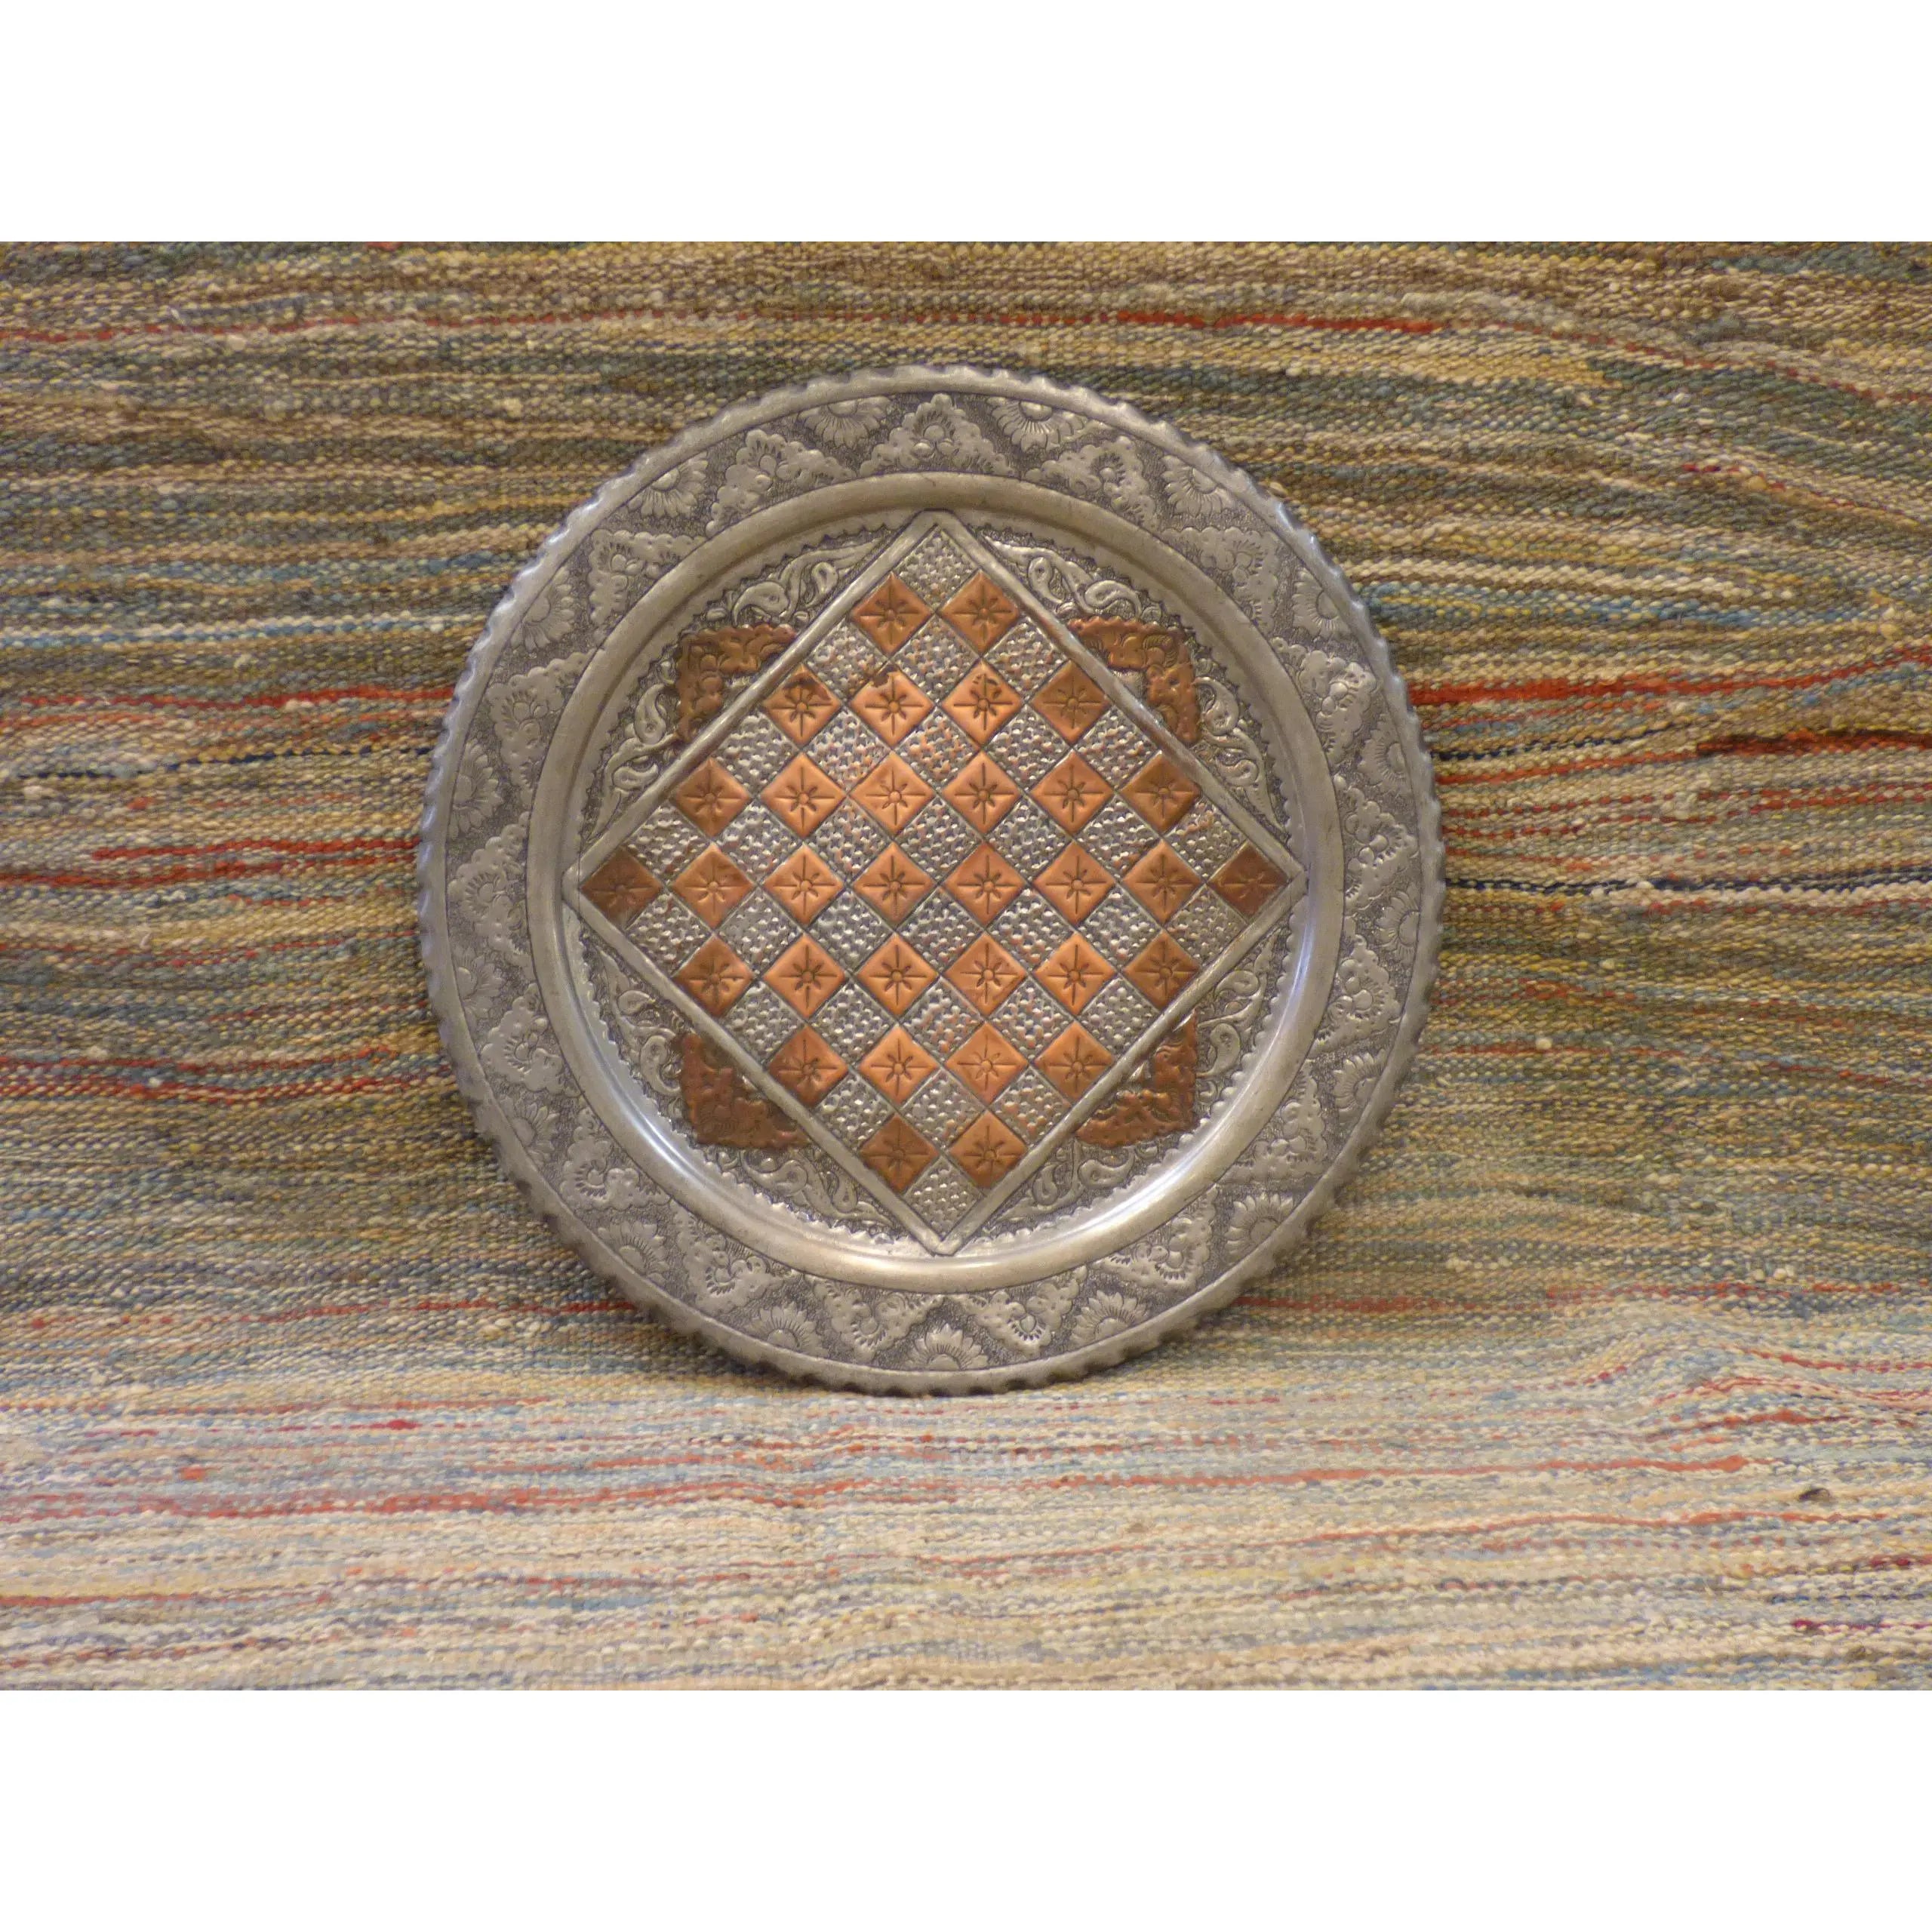 Authentic Art Antique Persian Engraved Round Checker Plate Ghalamzani 20" Round X 20" Round Abcca0115